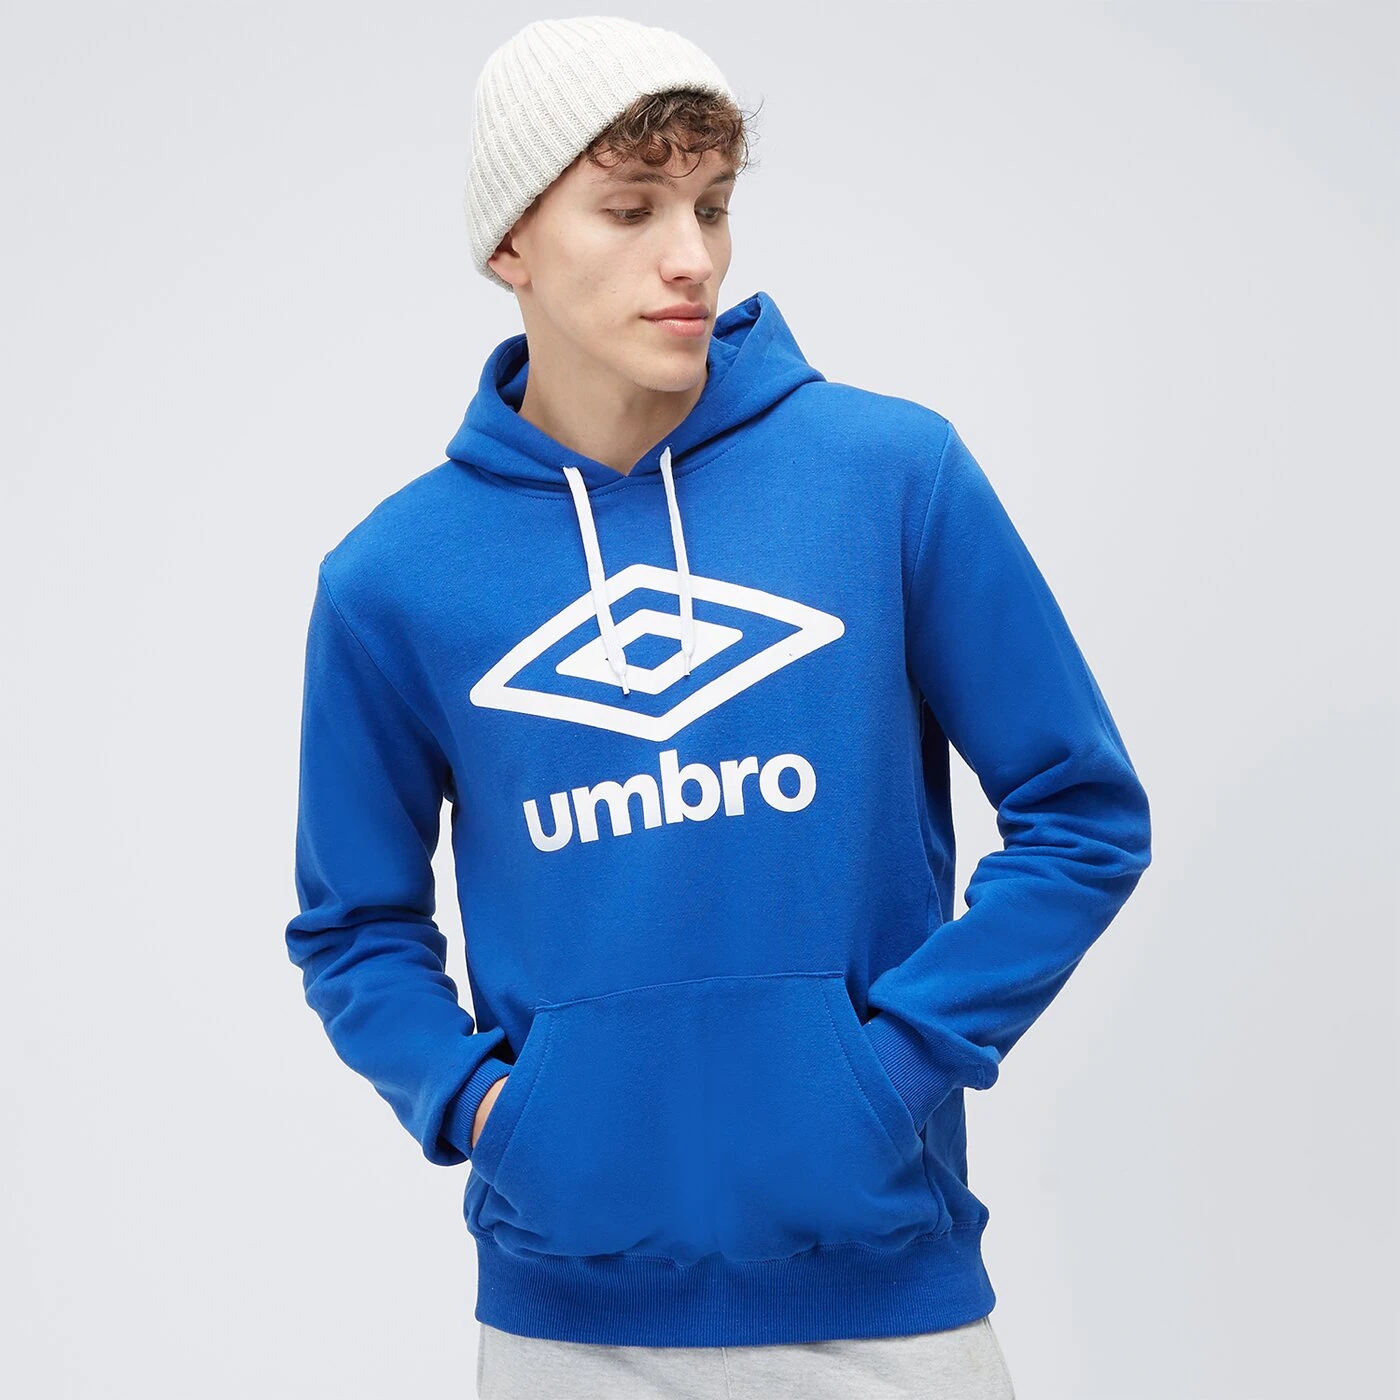 Свитшот Umbro с большим логотипом, синий